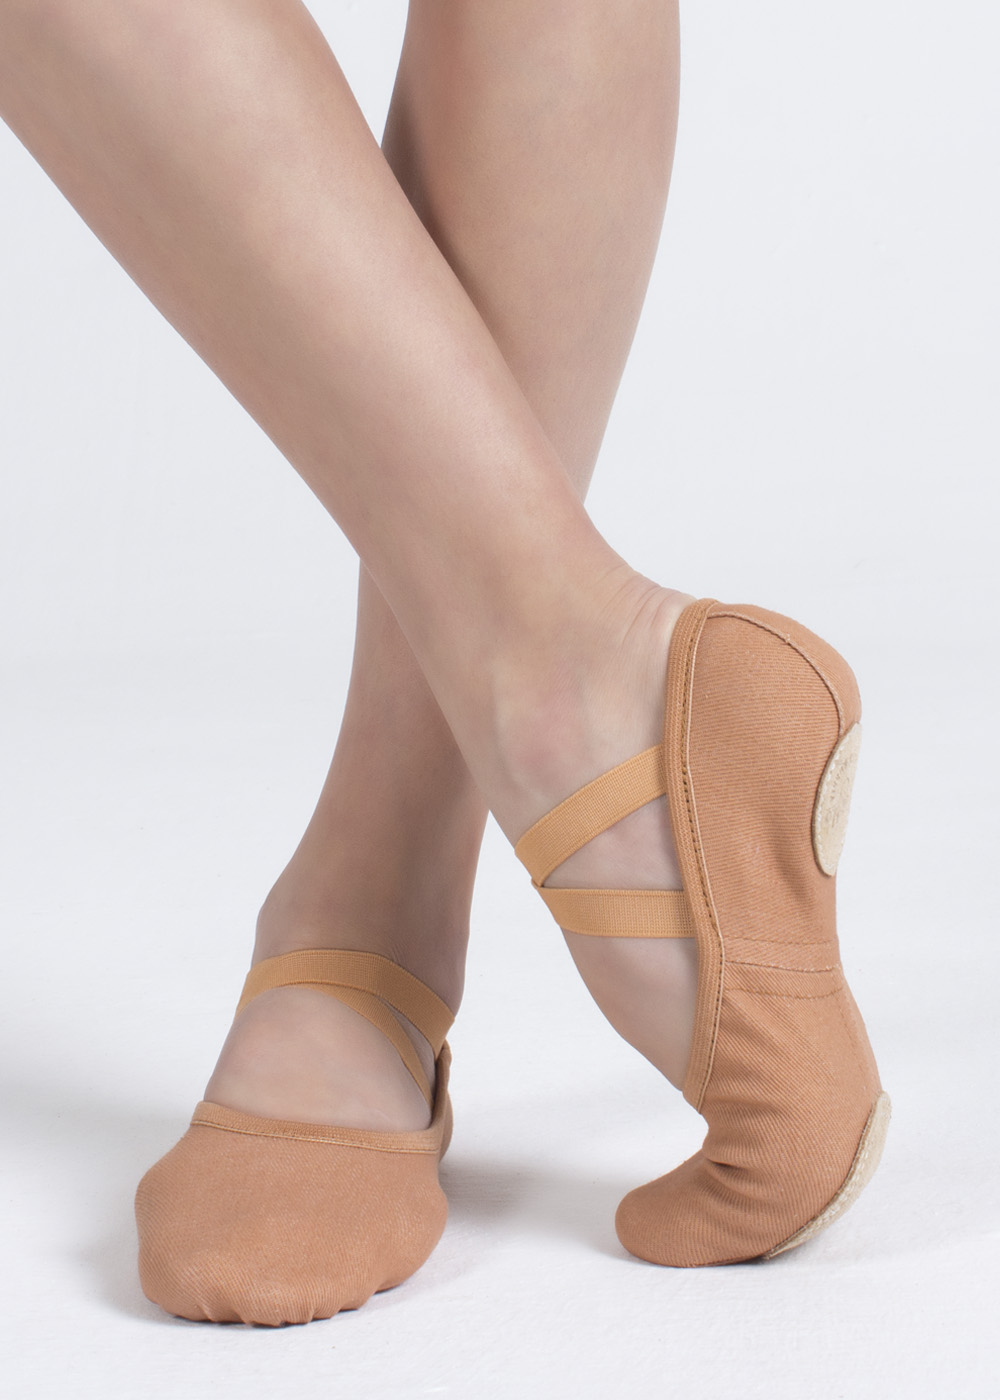 Grishko® Buy online the best ballet products. Order now!